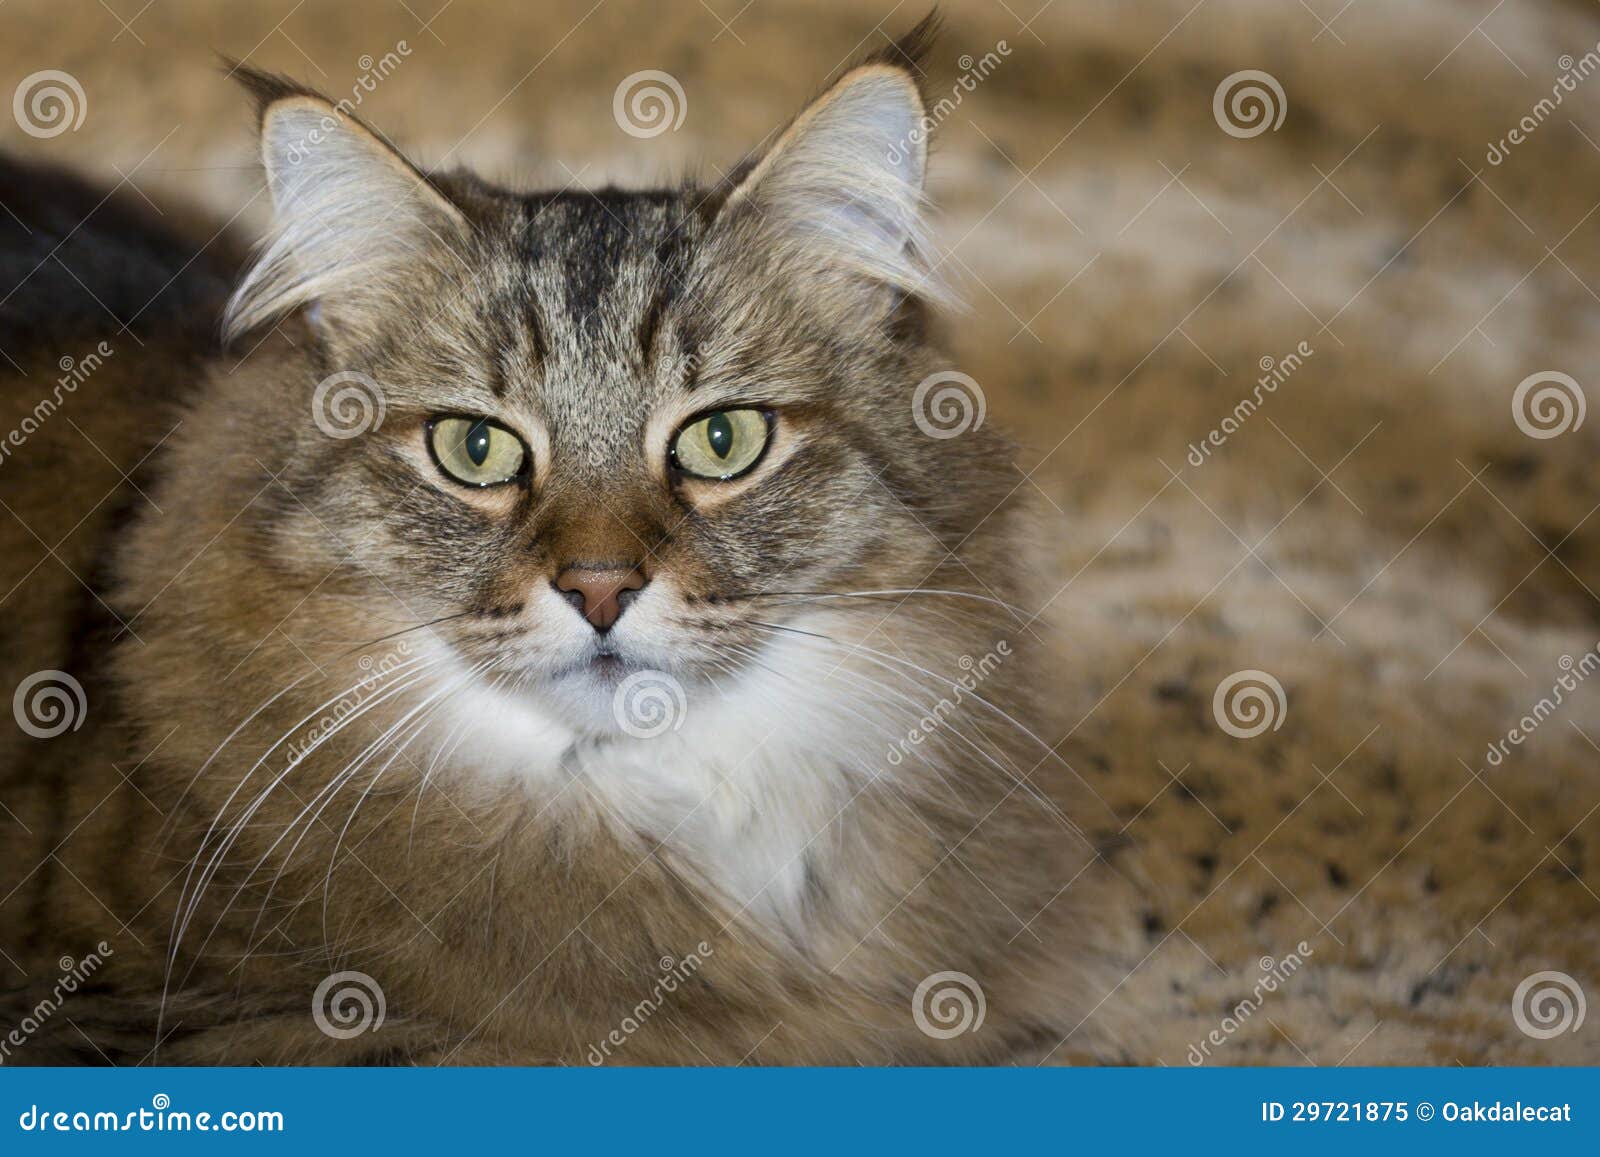 long-whiskered pixie bob cat